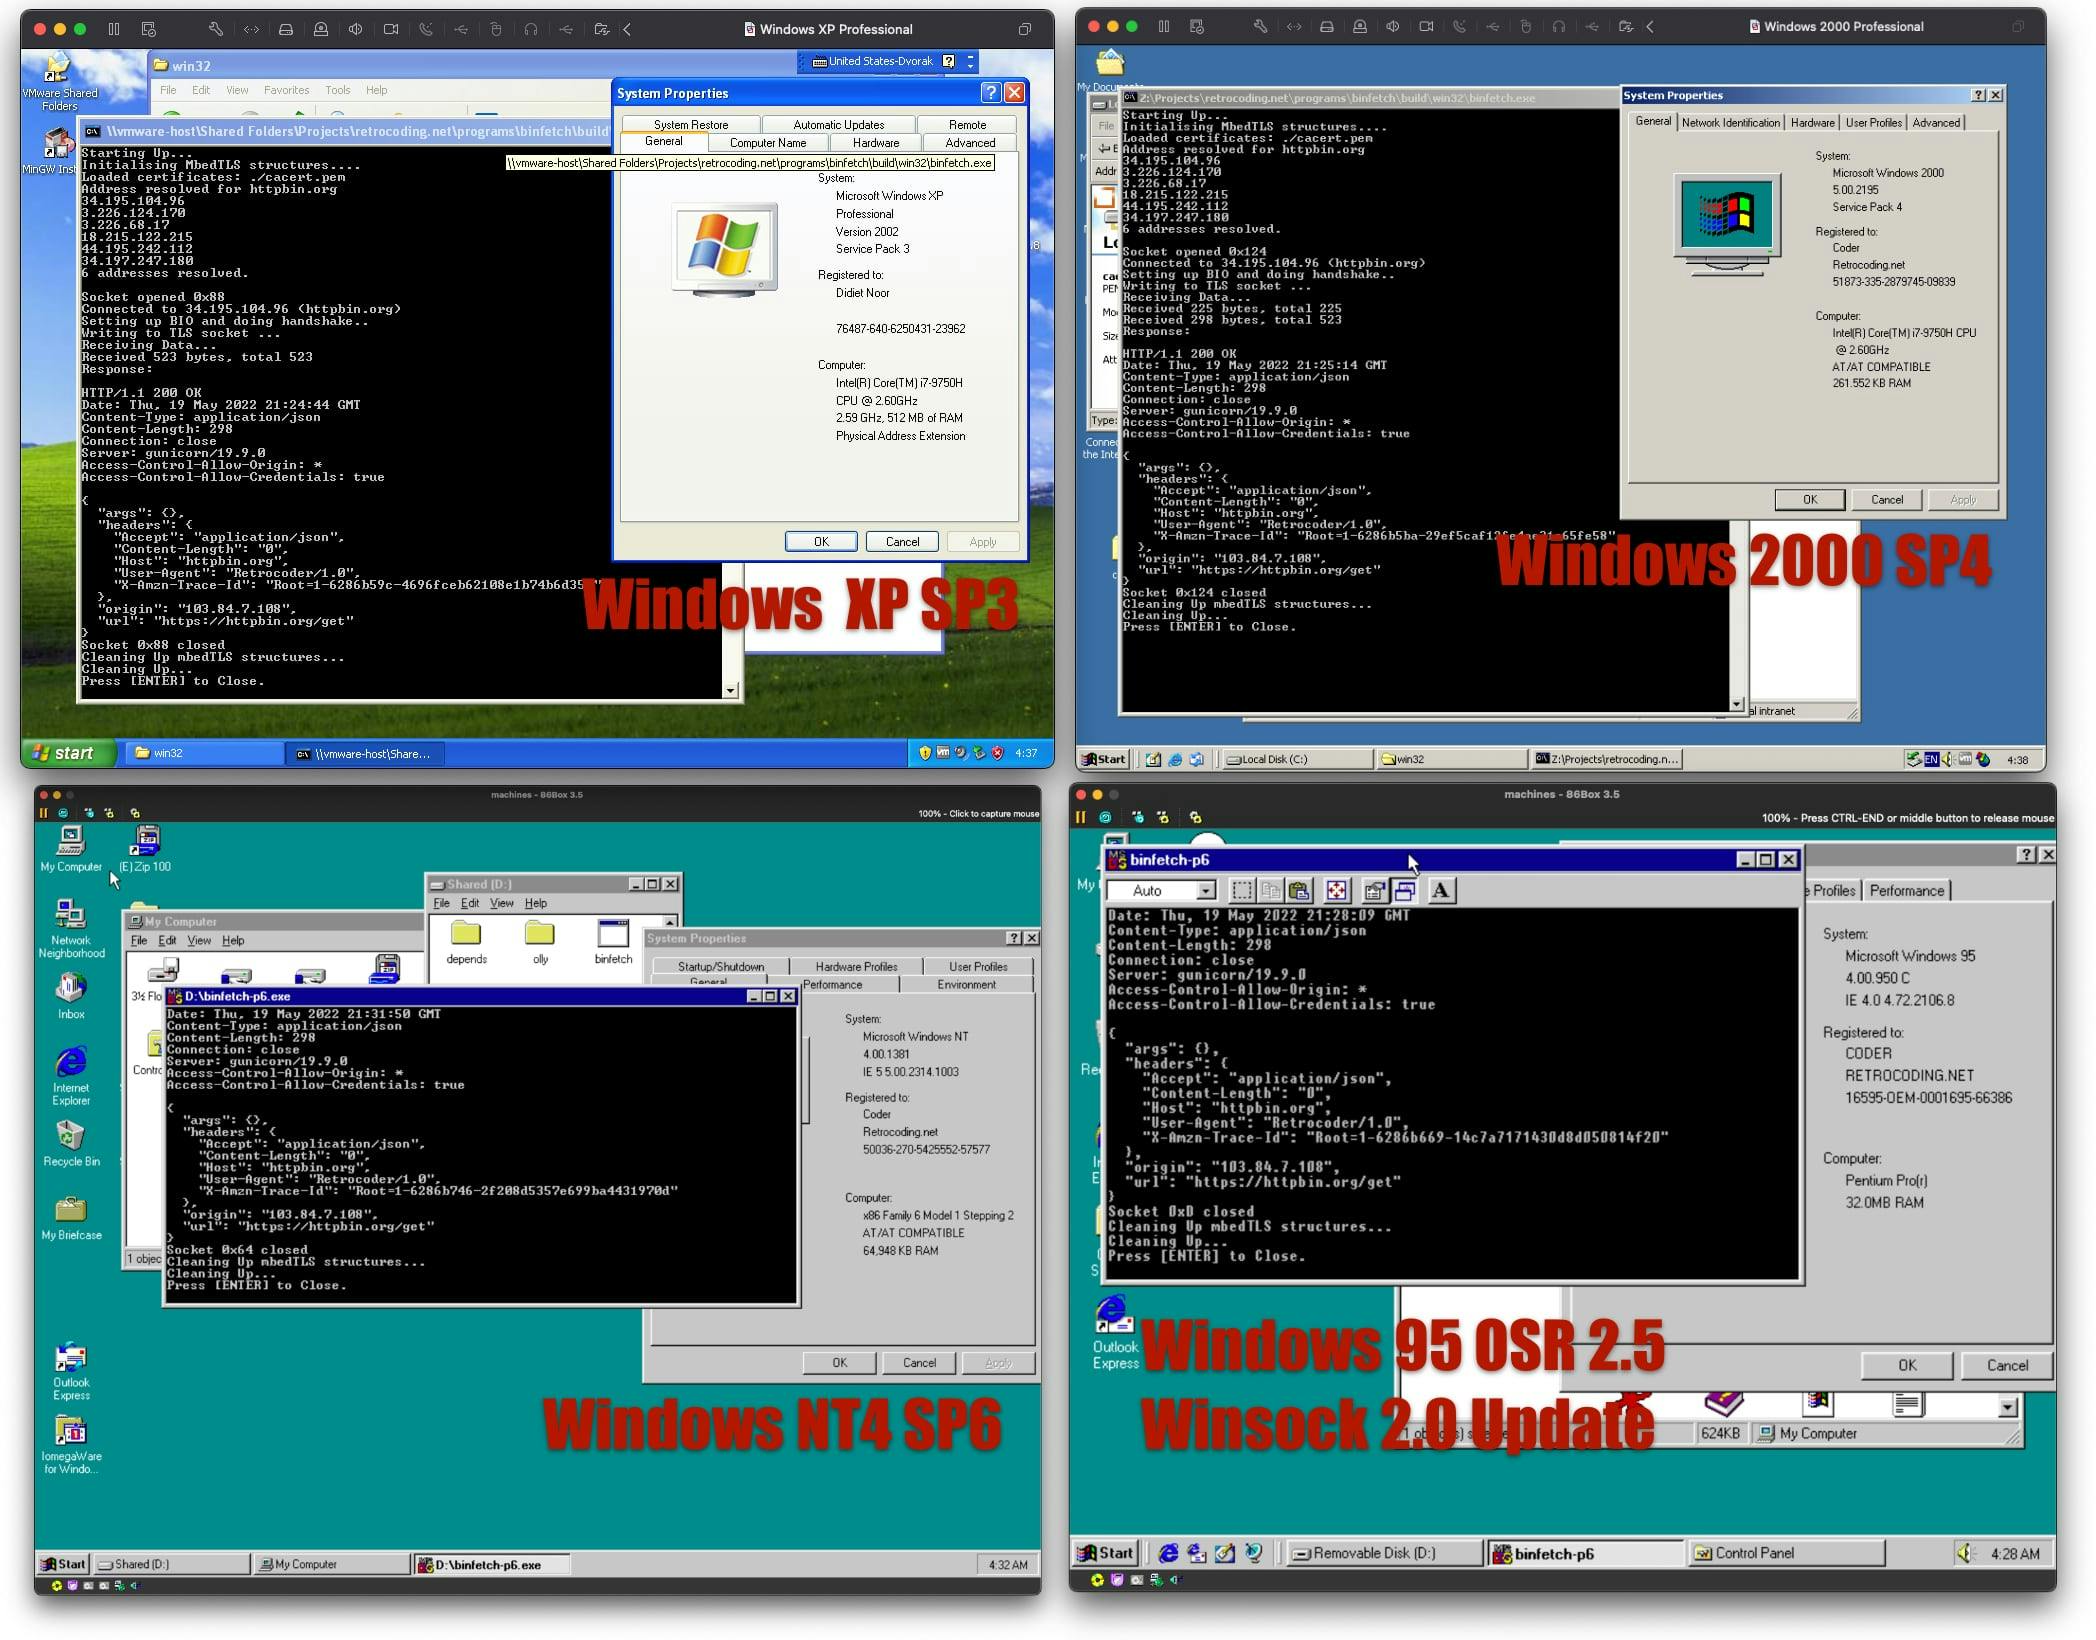 TLS 1.2 HTTP client running on Windows 95, Windows NT 4.0, Windows 2000, and Windows XP